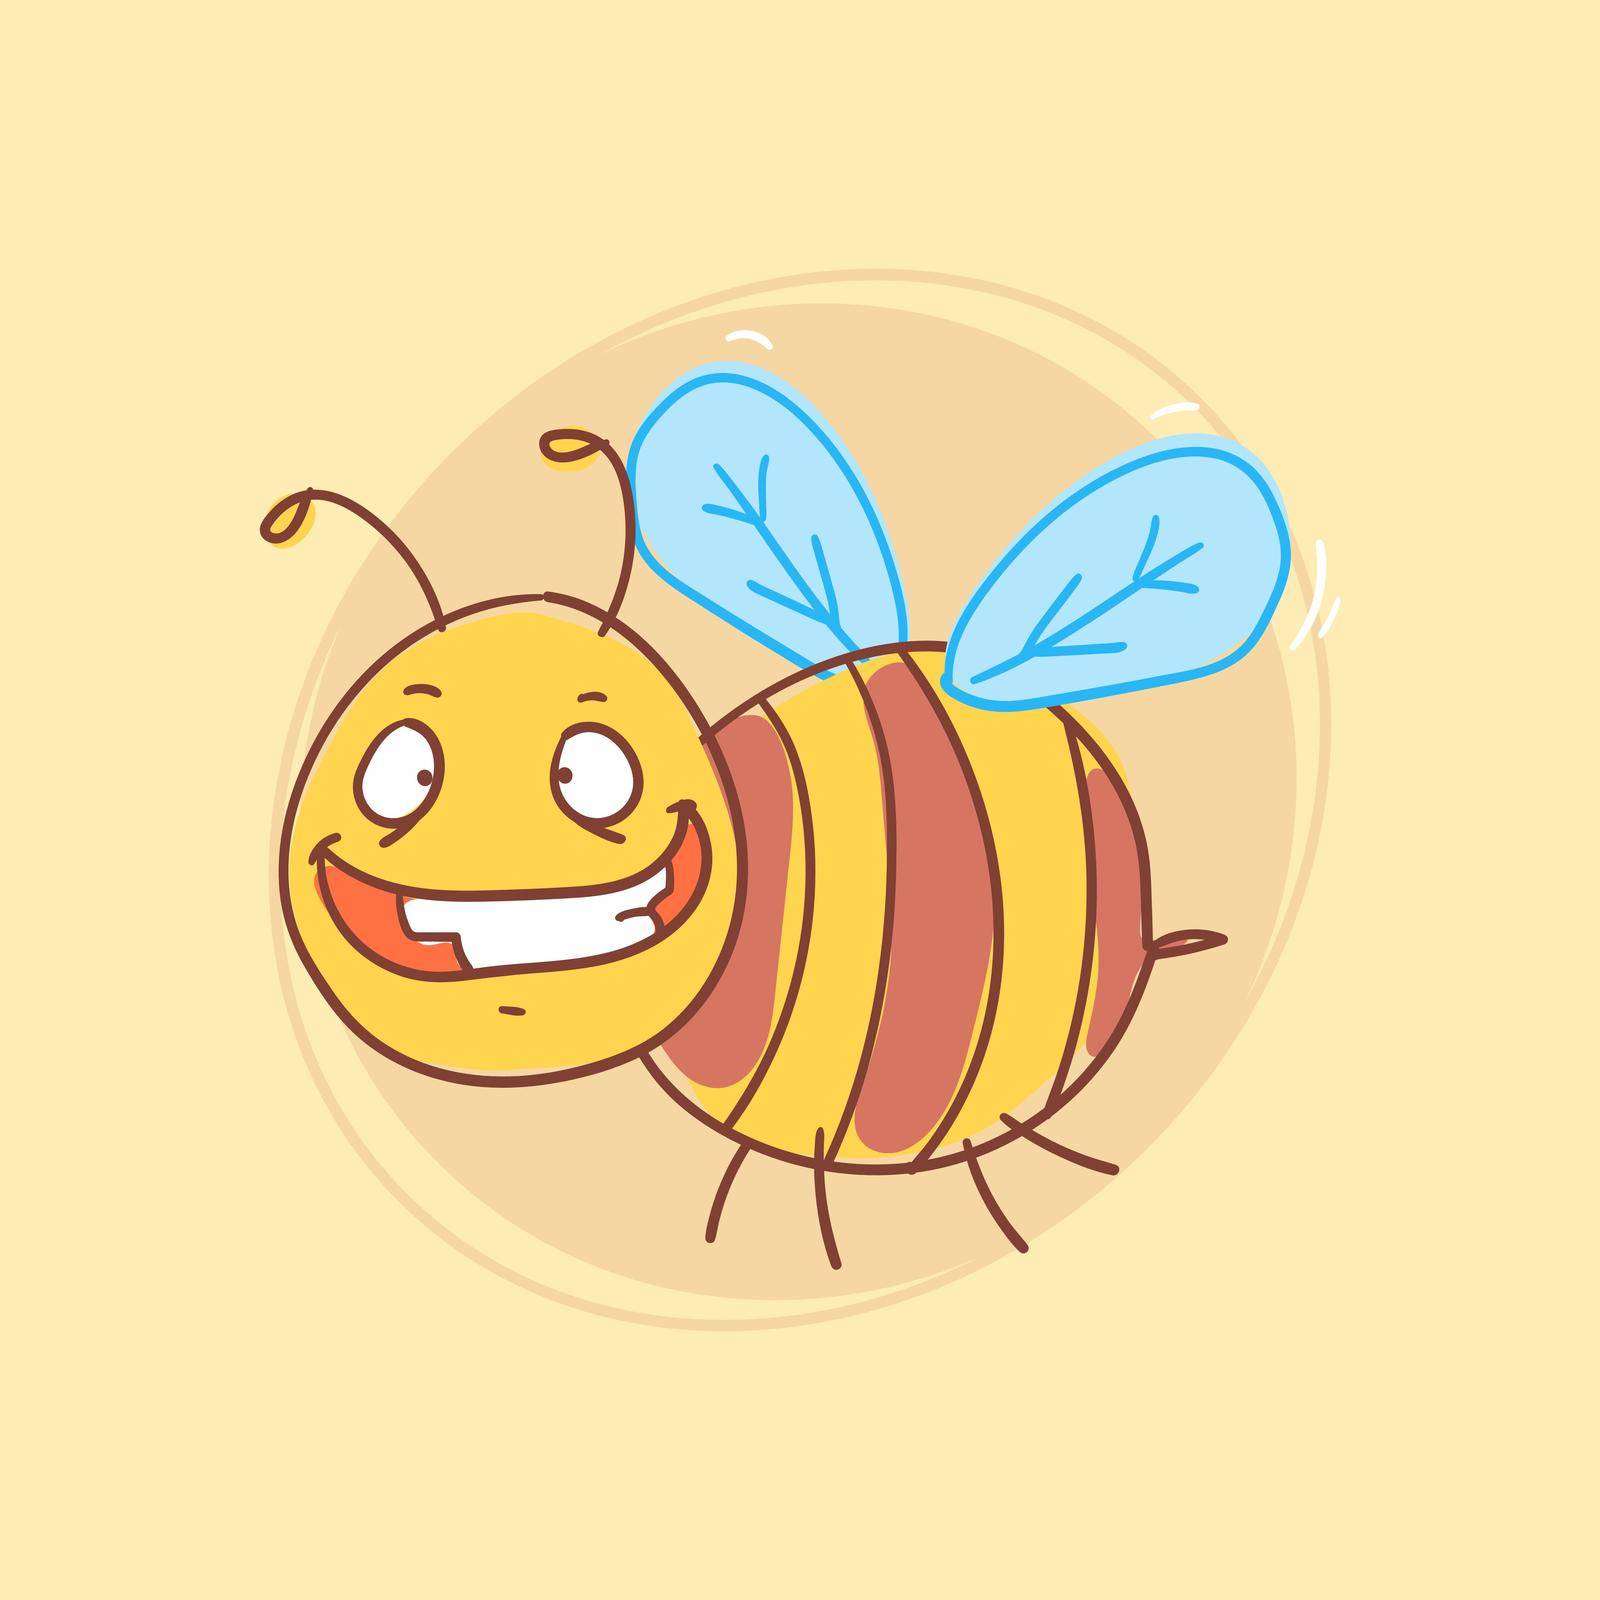 Bee cheerful and smiles. Funny character by yuriytsirkunov